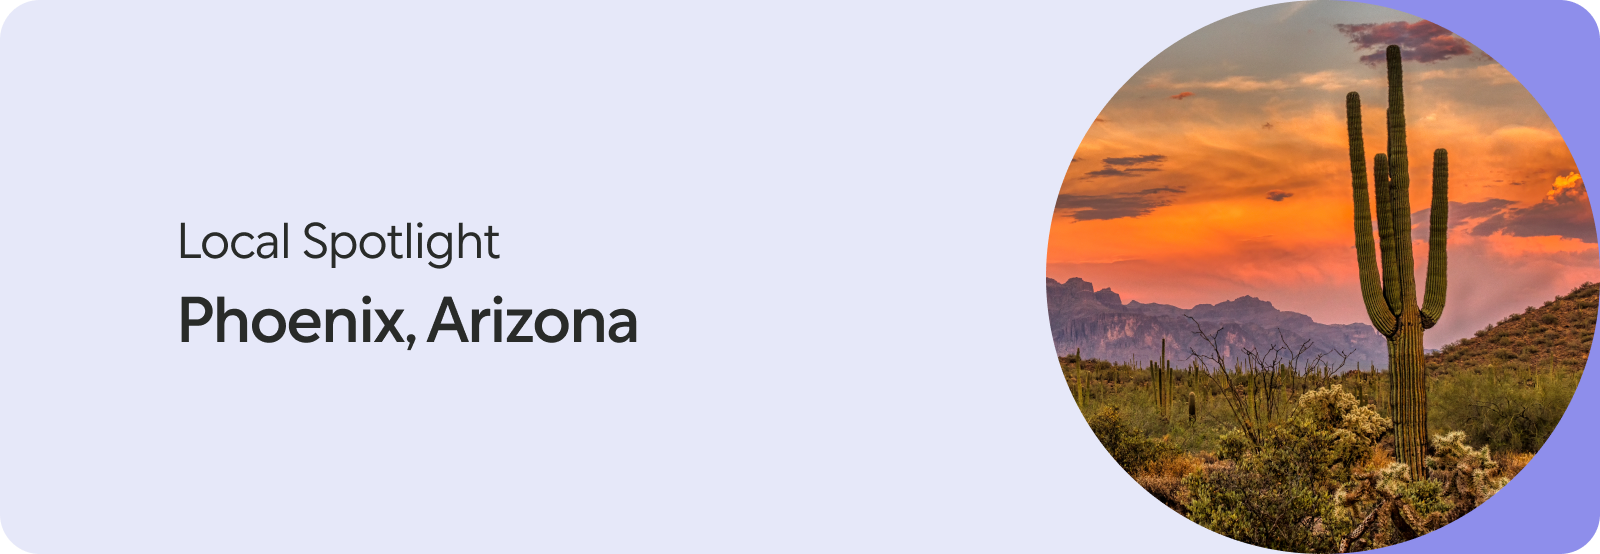 Light Purple with Text: Local Spotlight Phoenix, Arizona and a Circular Photo of Cacti Sunset